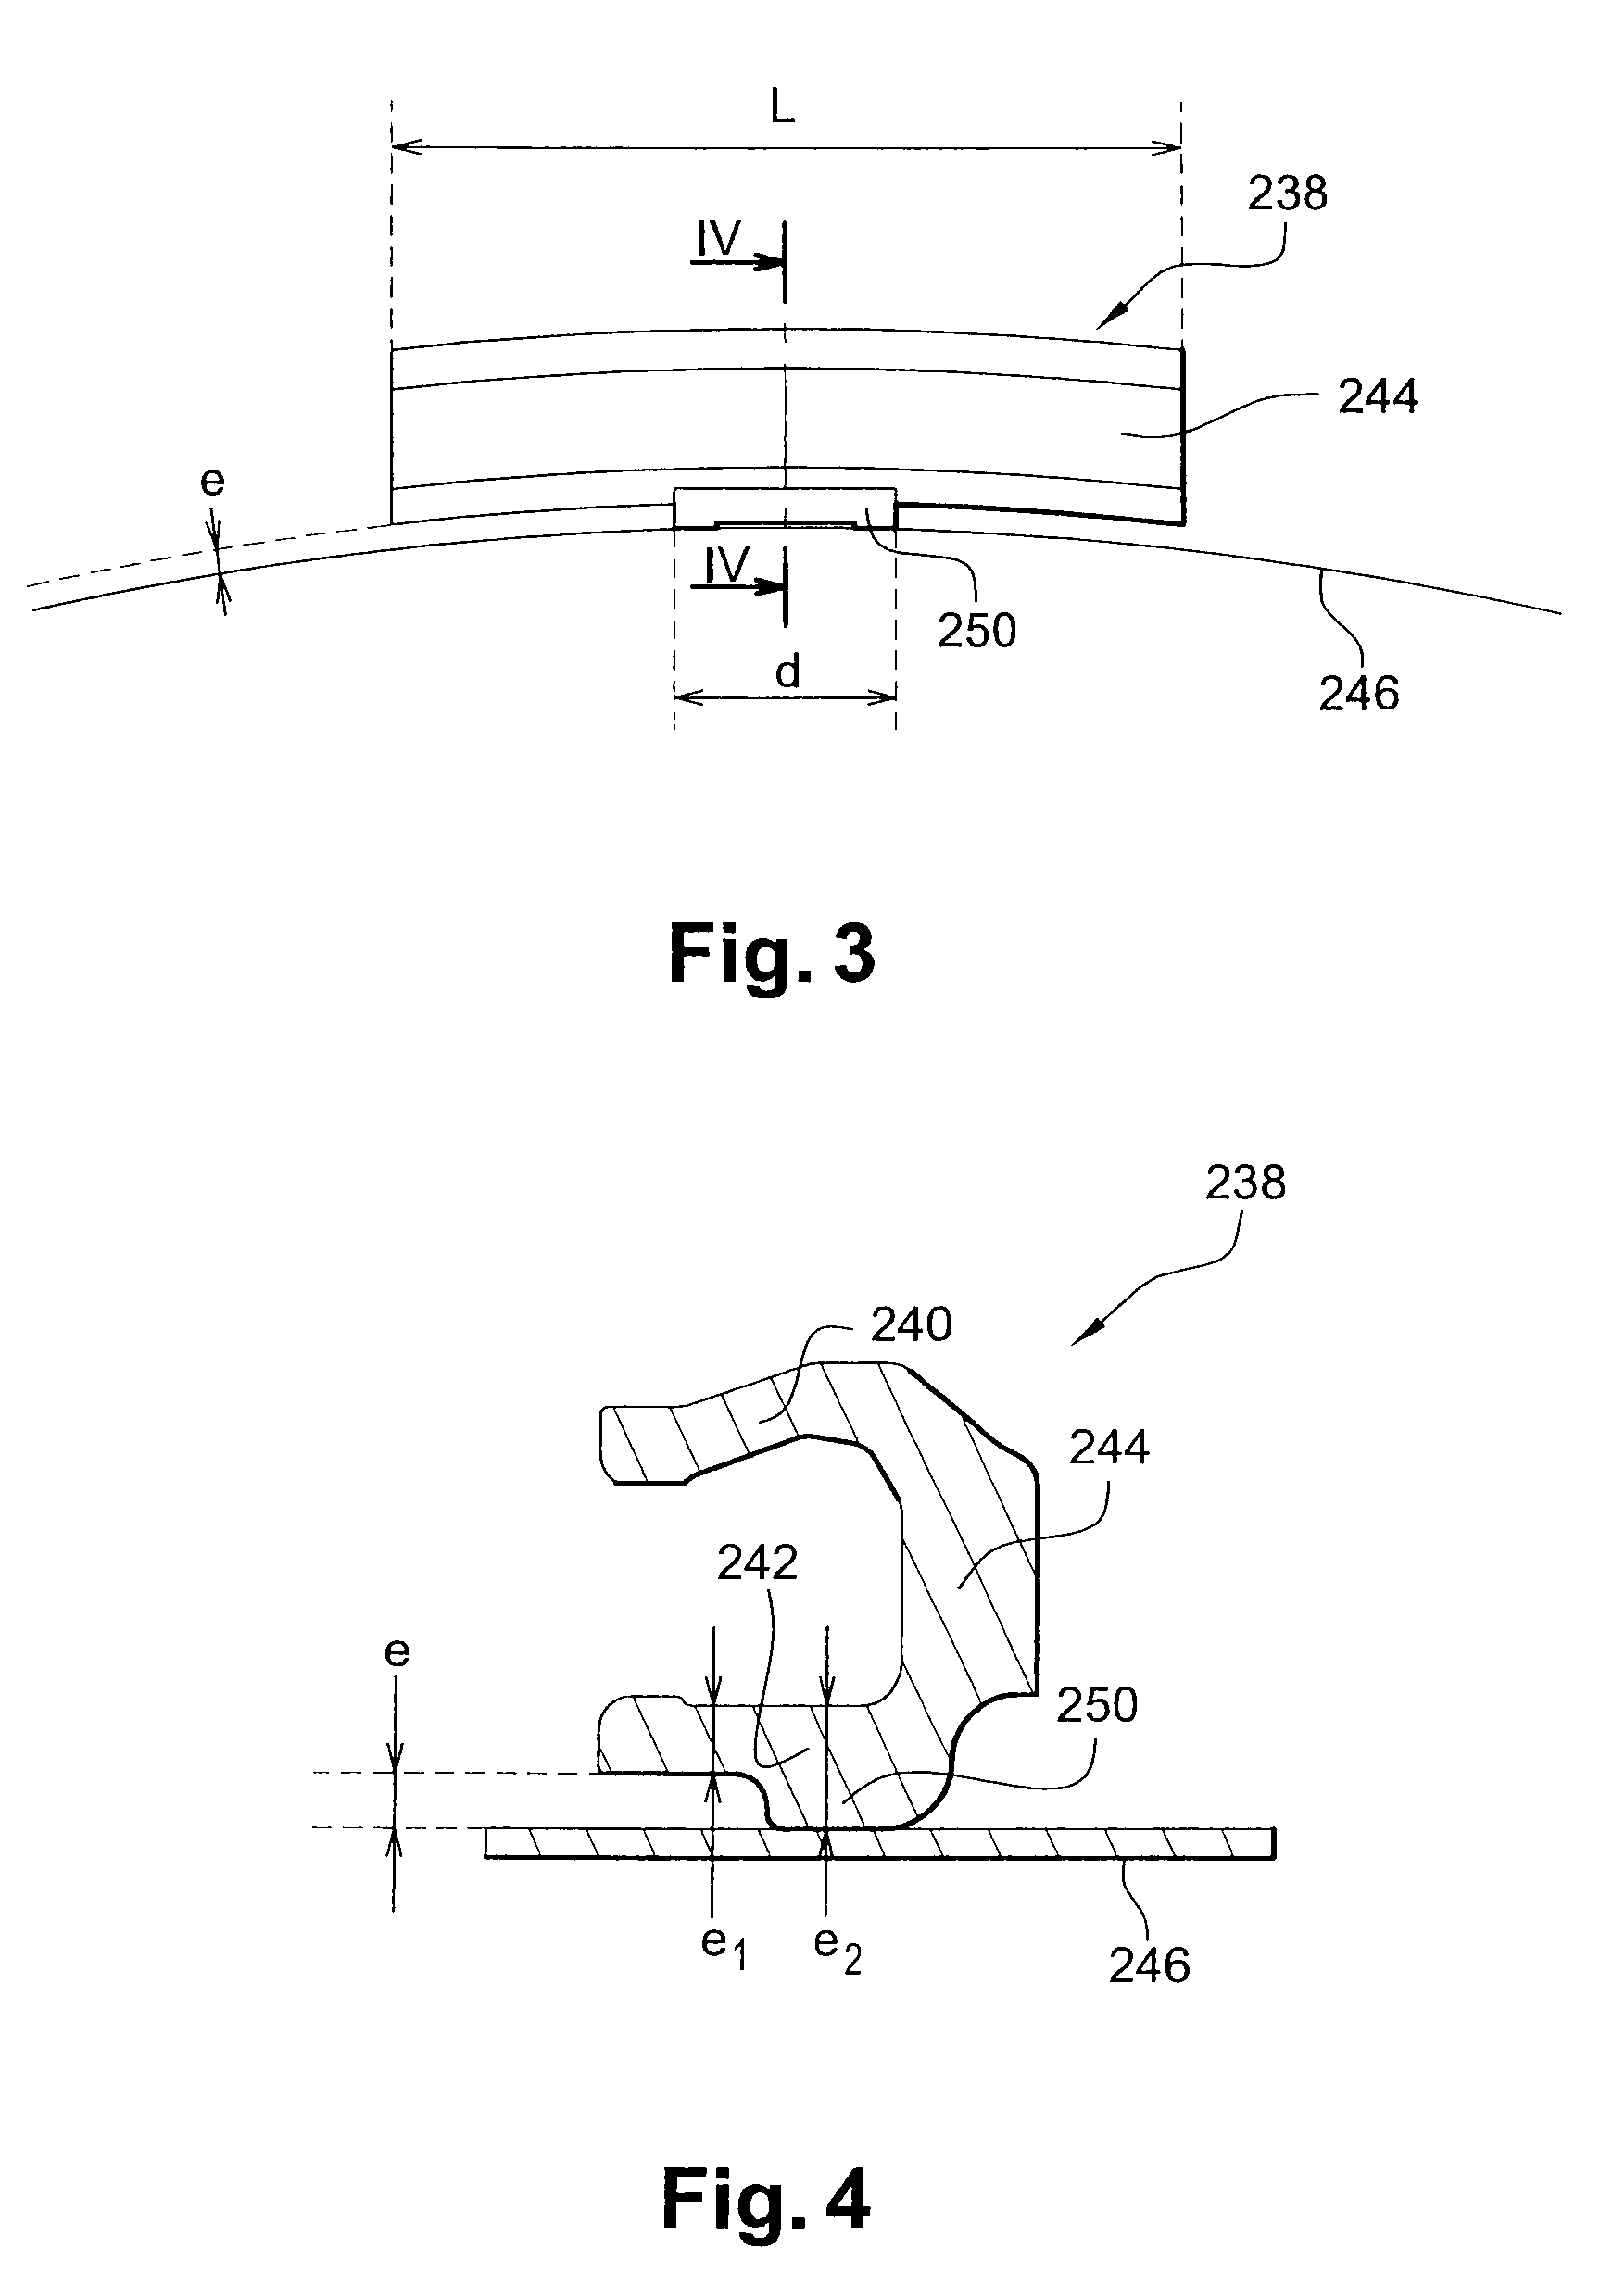 Turbine or compressor stage for a turbojet